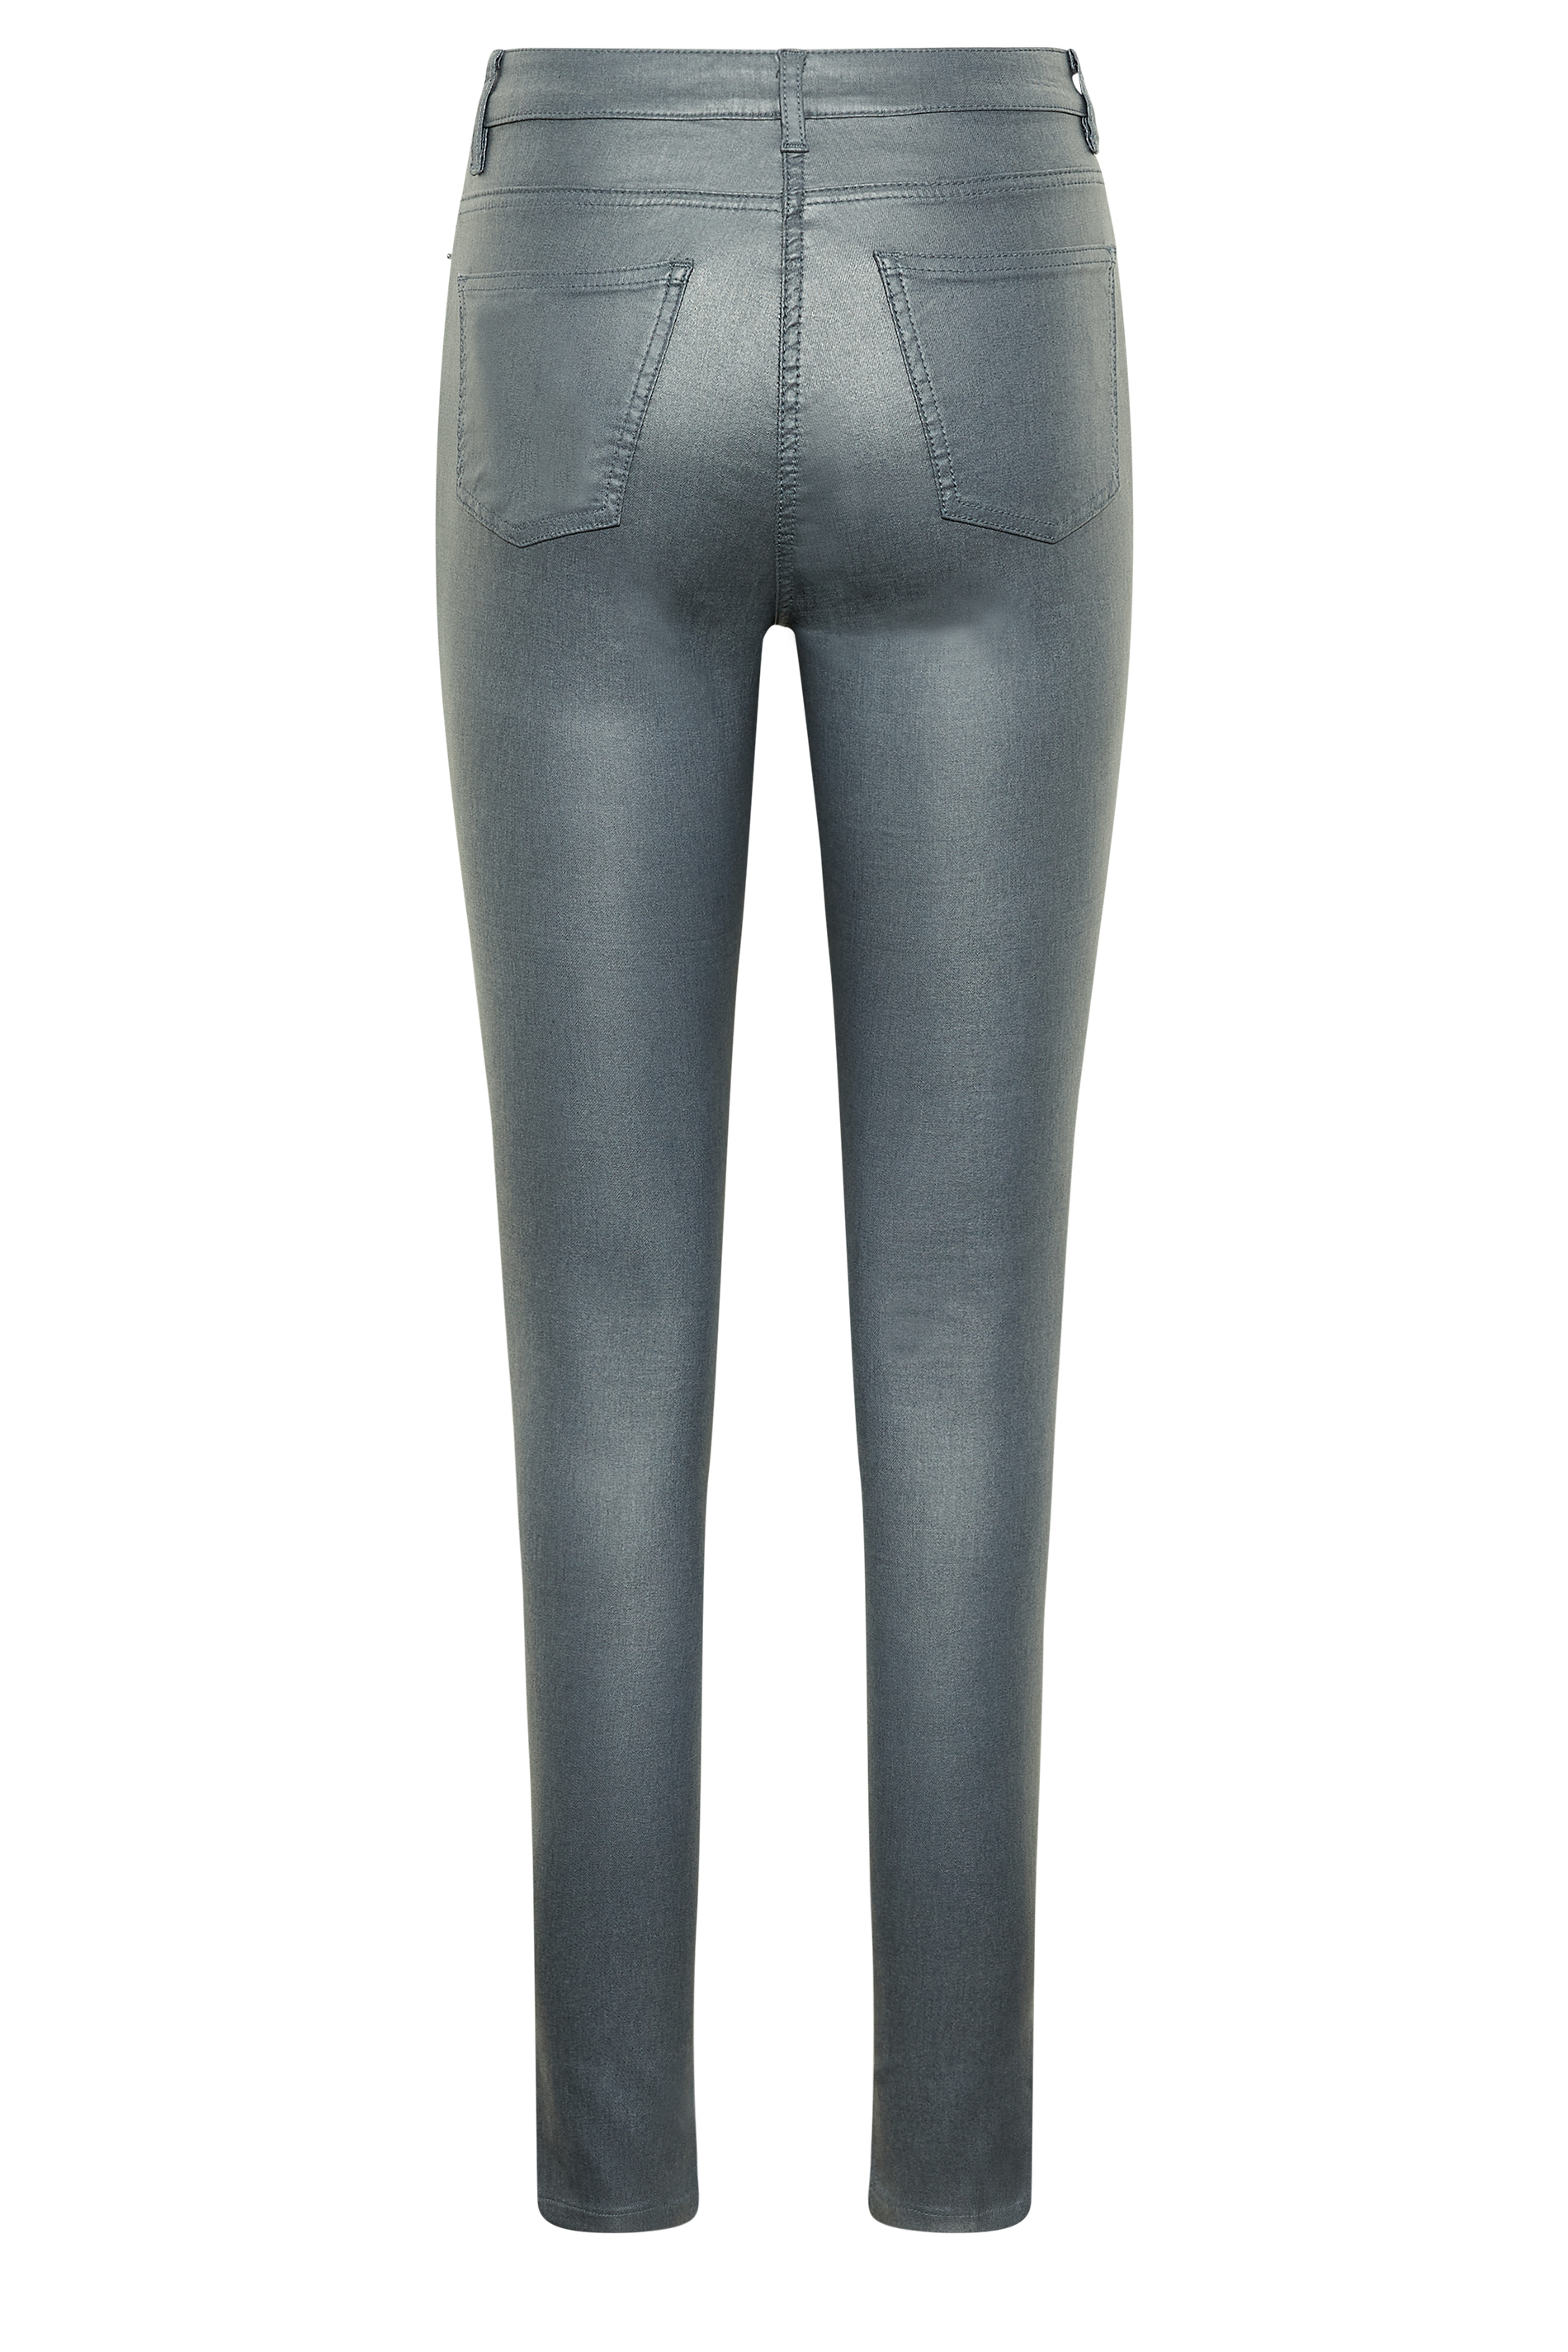 LTS Tall Women's Blue Coated AVA Skinny Jeans | Long Tall Sally  3